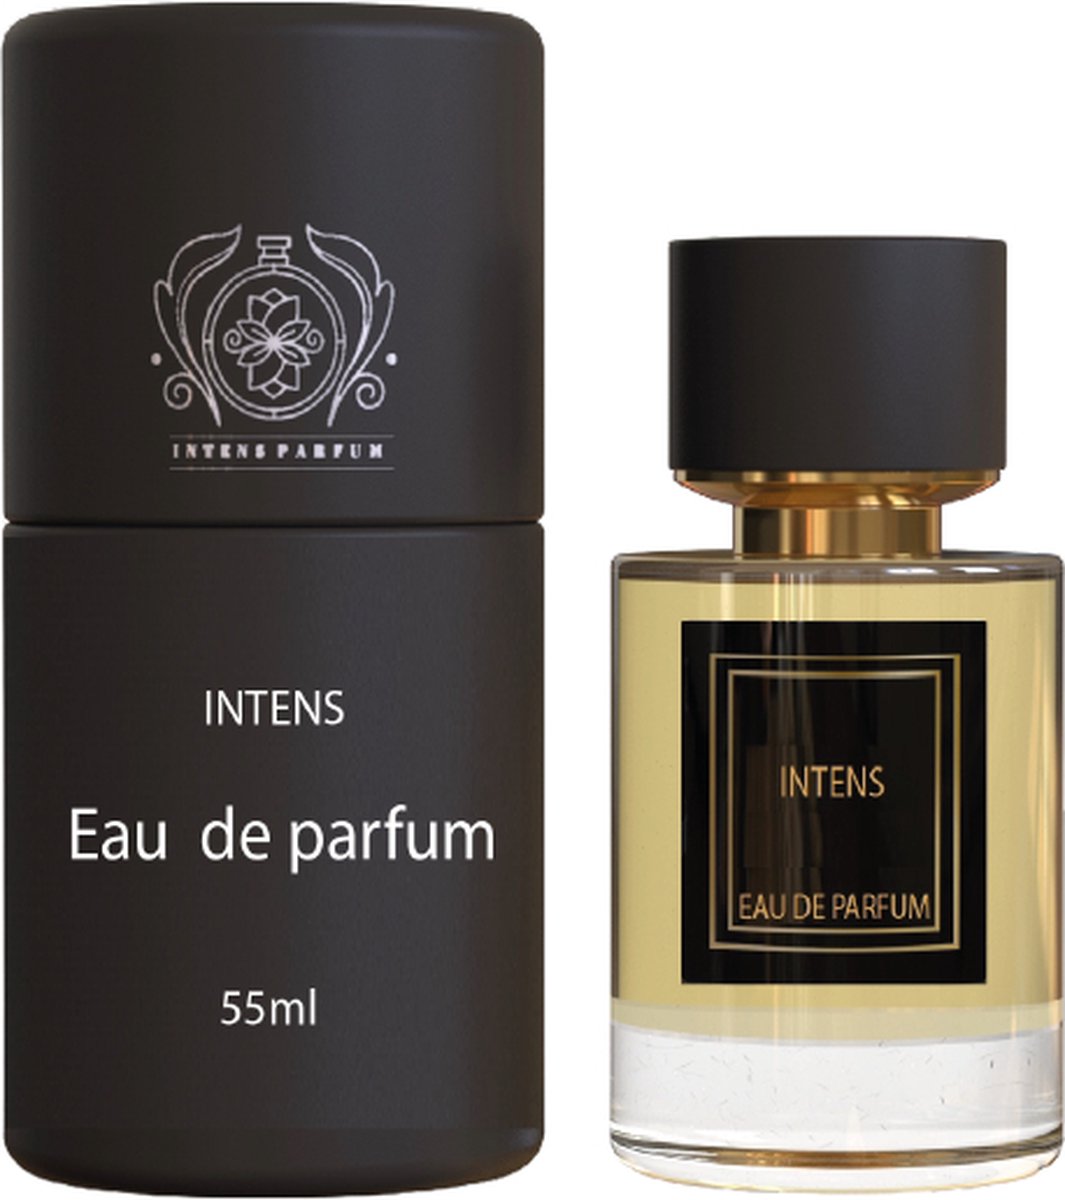 Intens No 510 Eau de parfum 55 ml - For Men